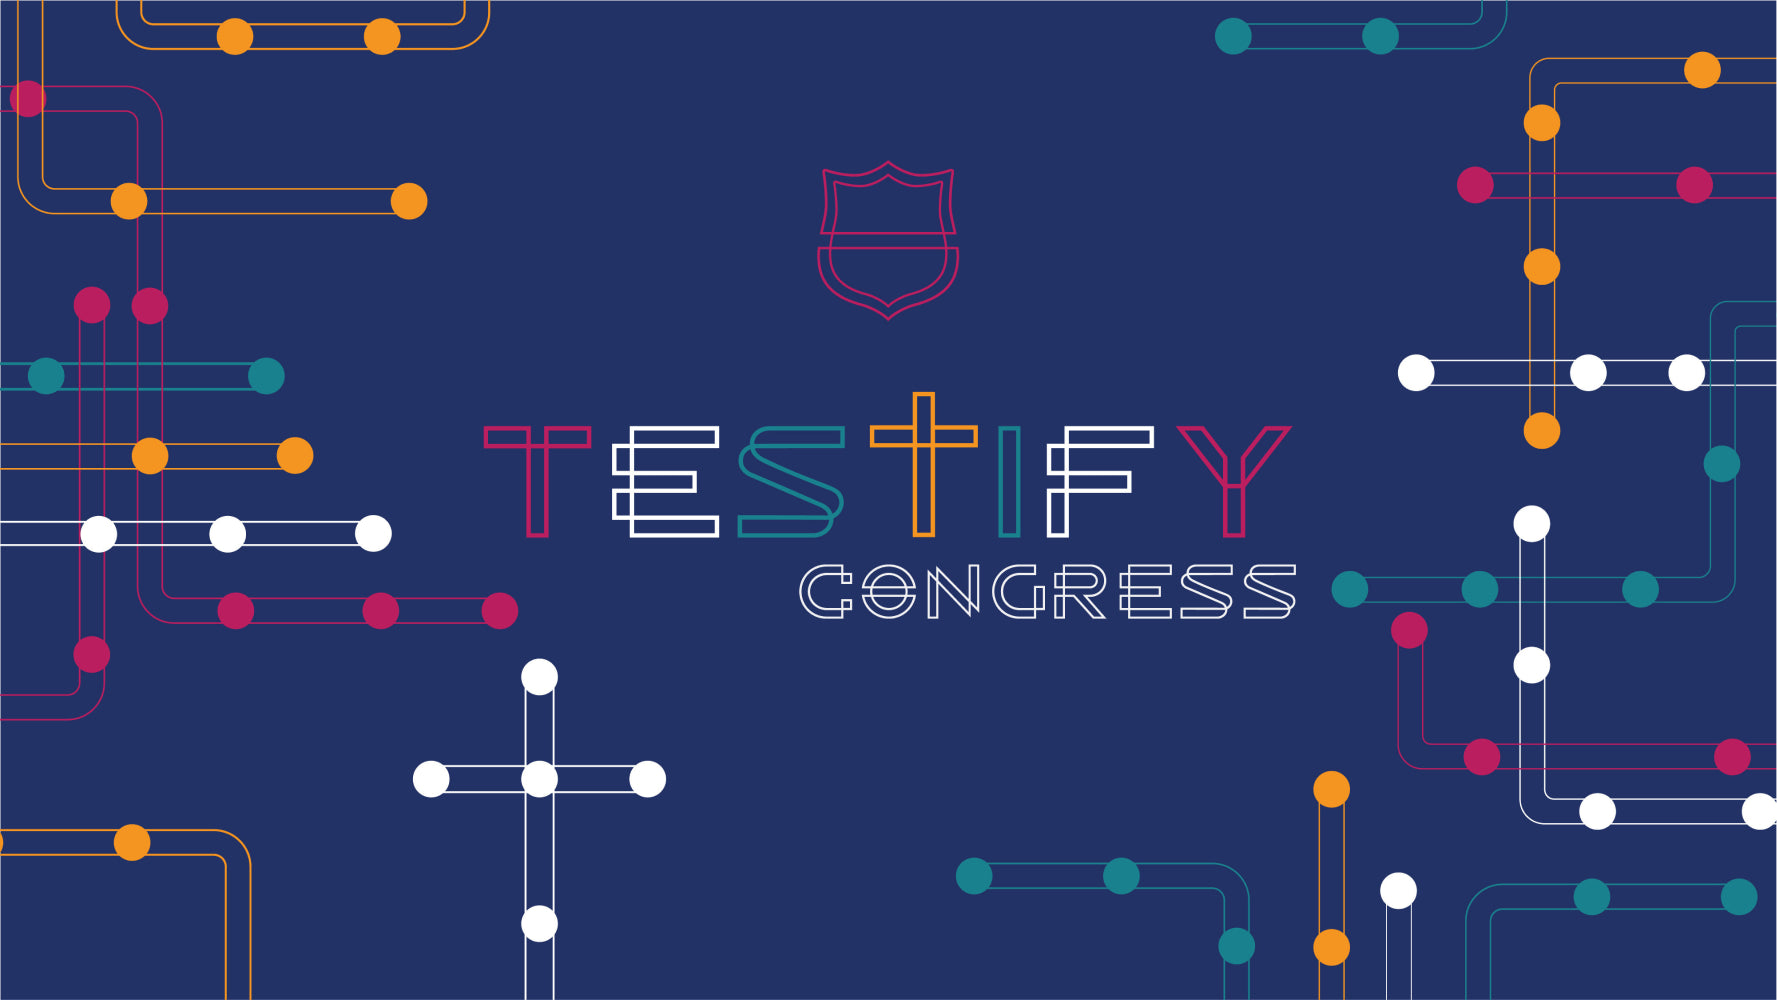 TradeWest Congress Art Contest Info